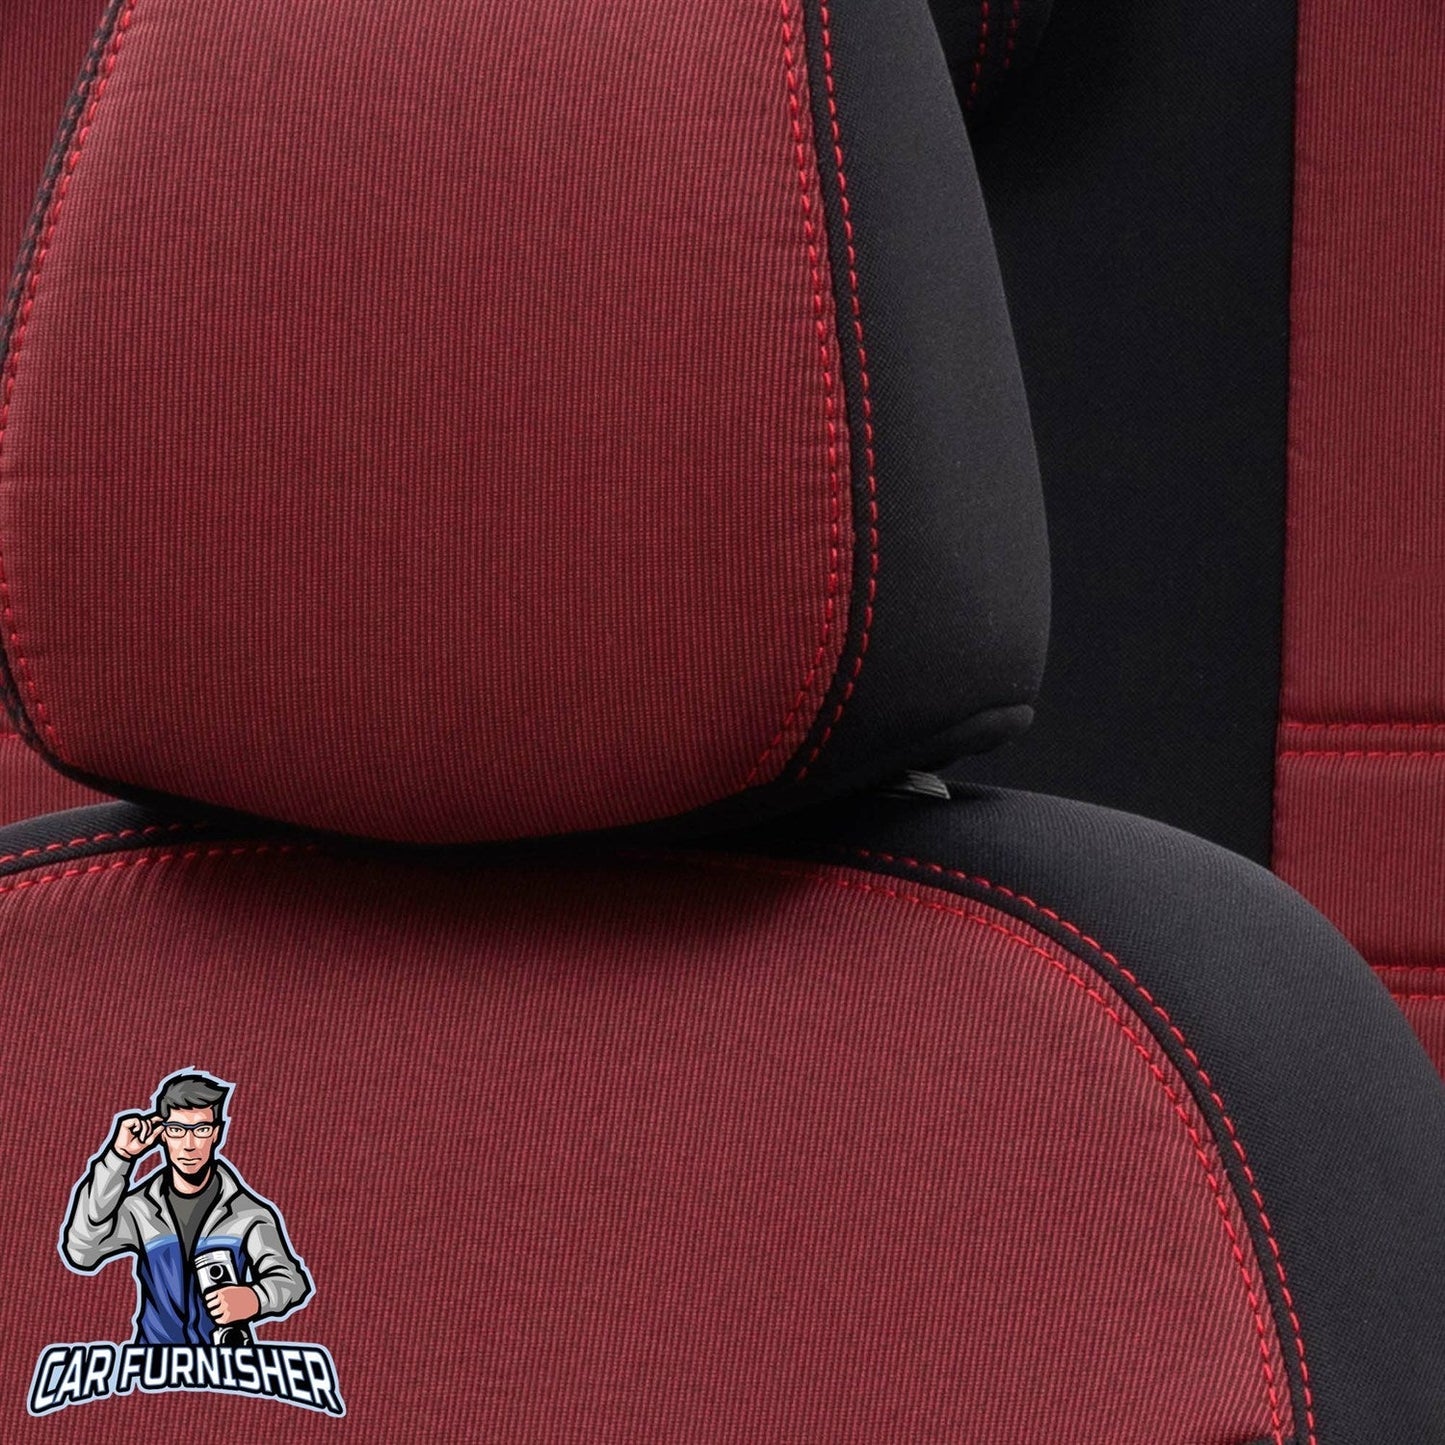 Skoda Scala Seat Covers Original Jacquard Design Red Jacquard Fabric